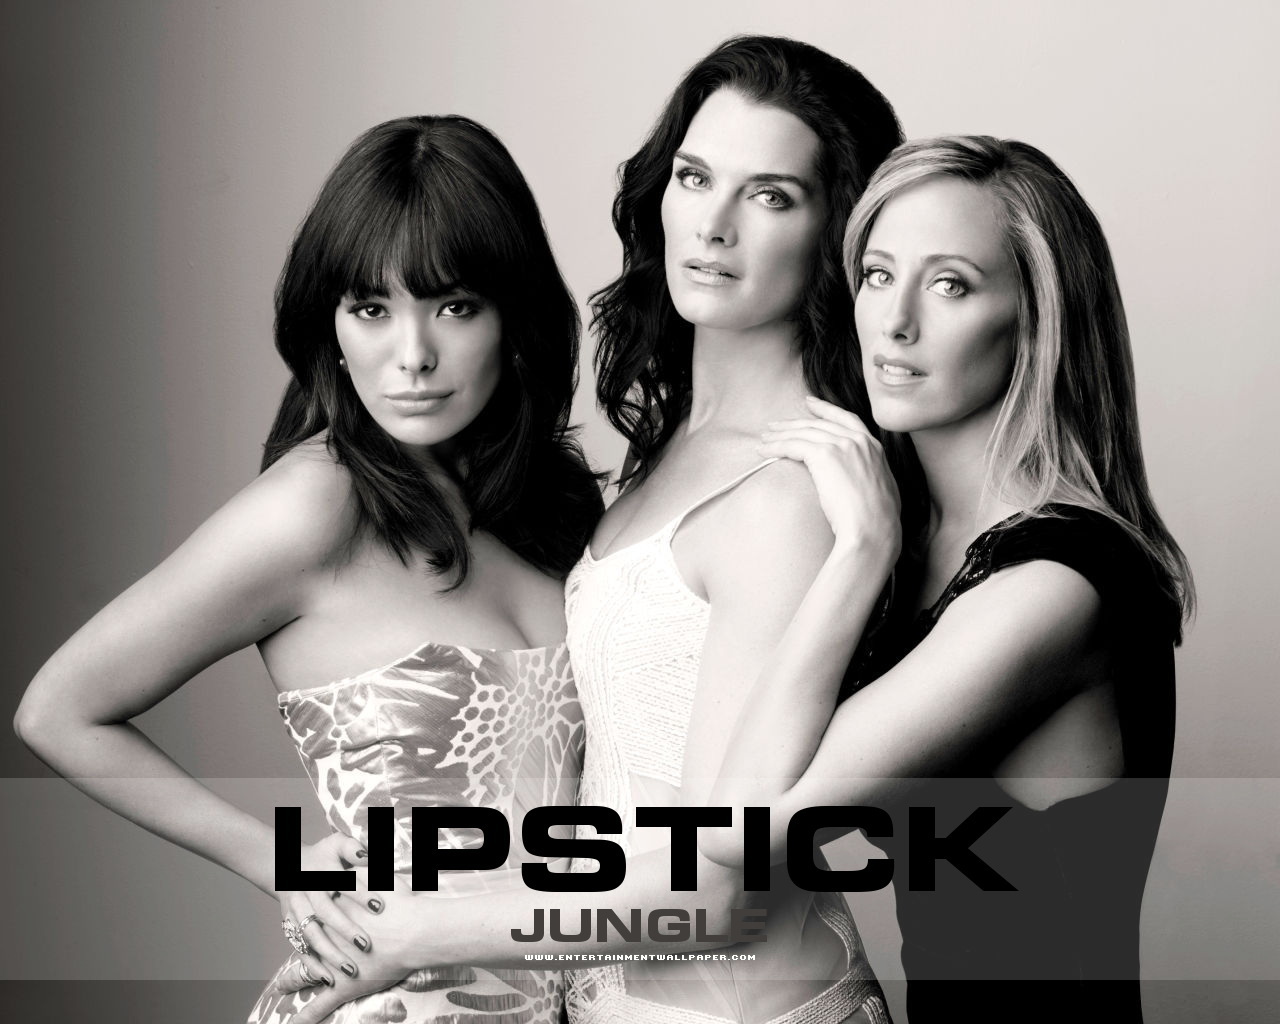 Download this Lipstick Jungle Wallpaper picture